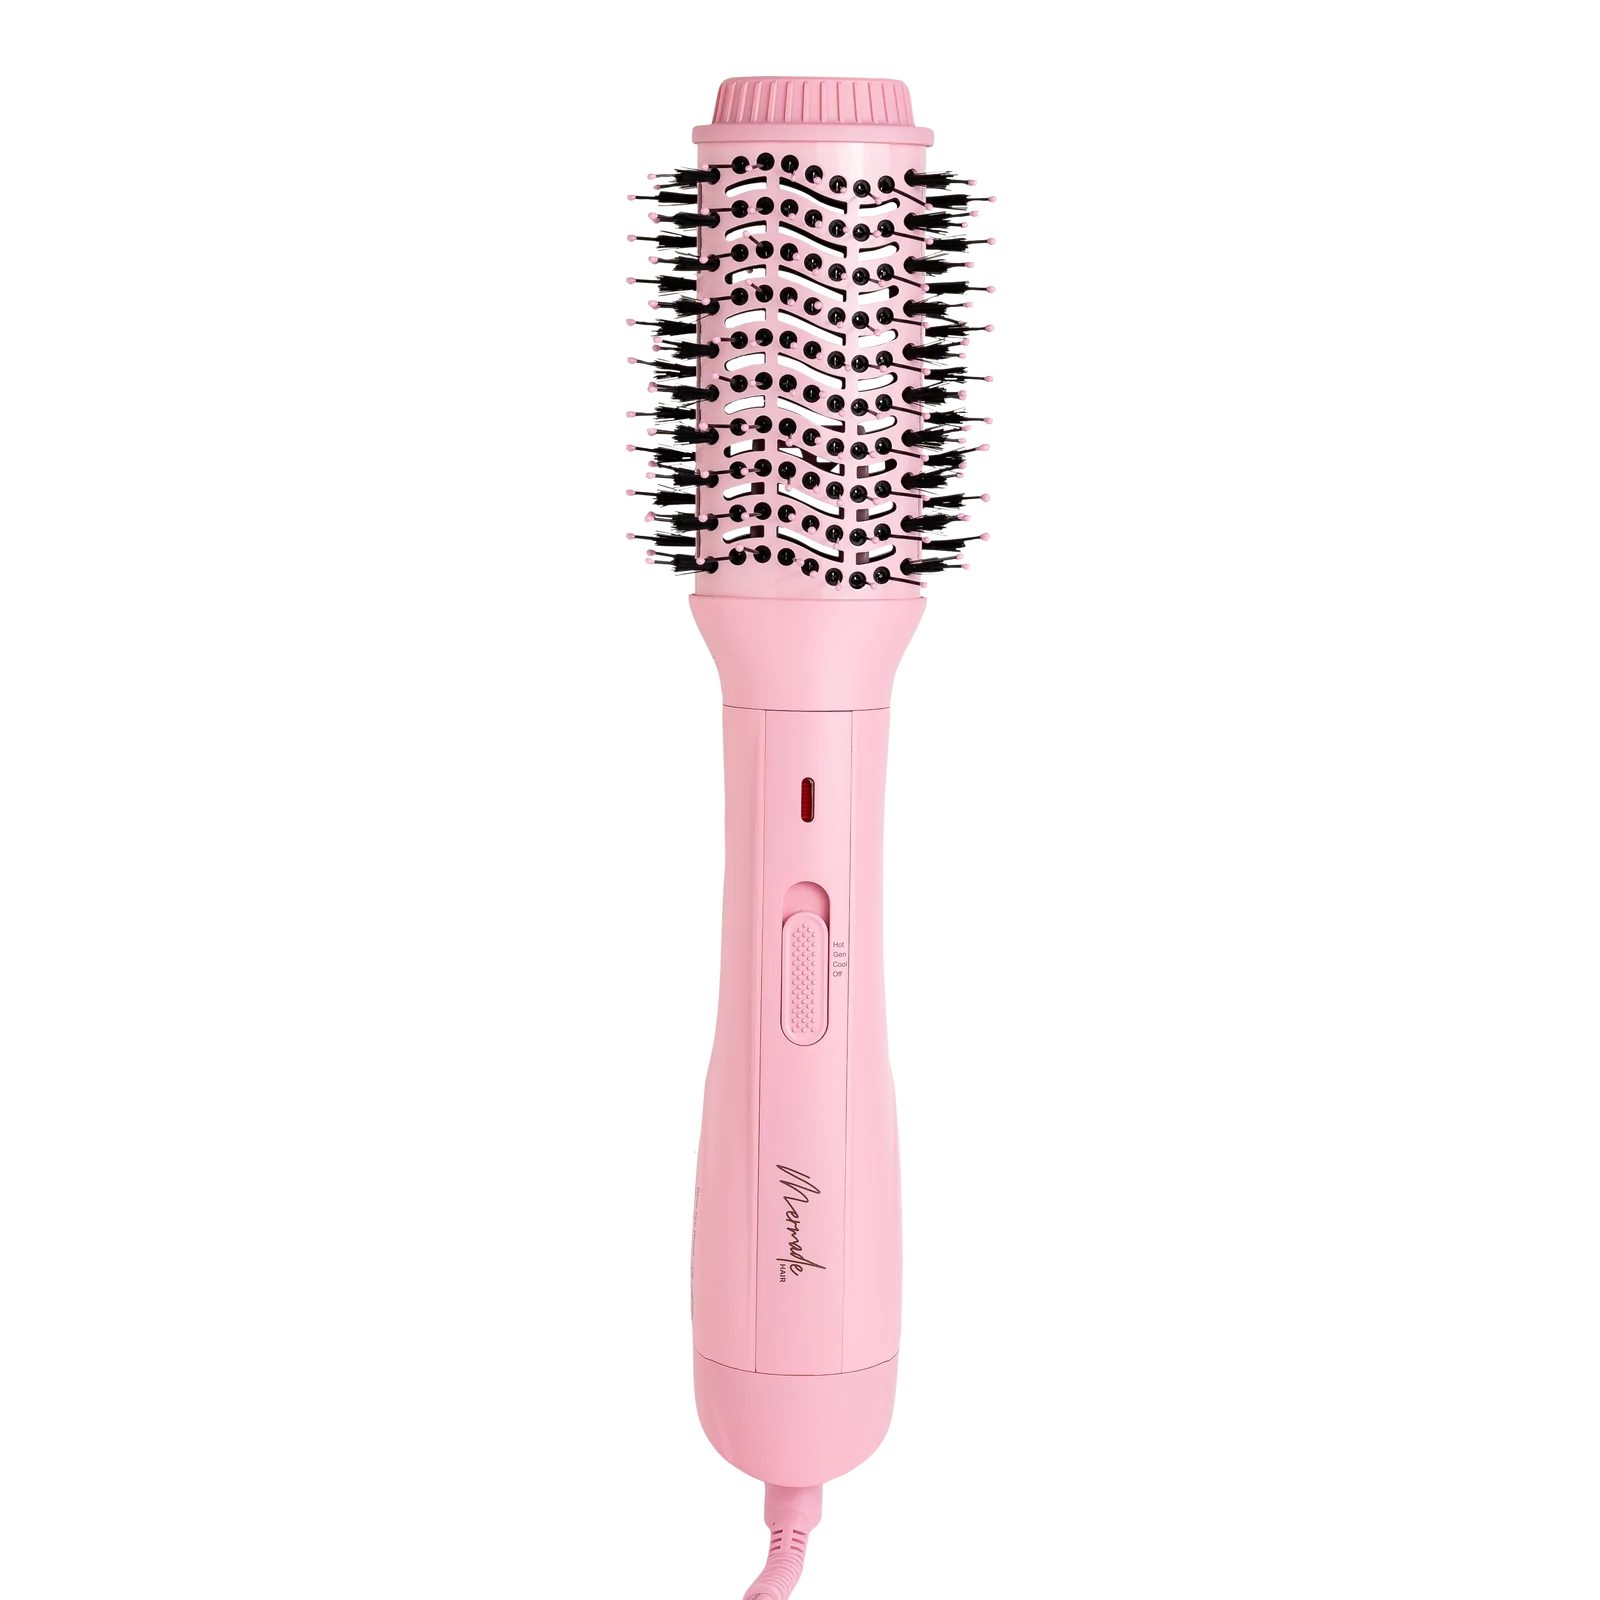 Ionen-Haarbürste Mermade Pink - Föhn-Bürste, Mermade Dry extra Hair Hair Blow Brush leicht